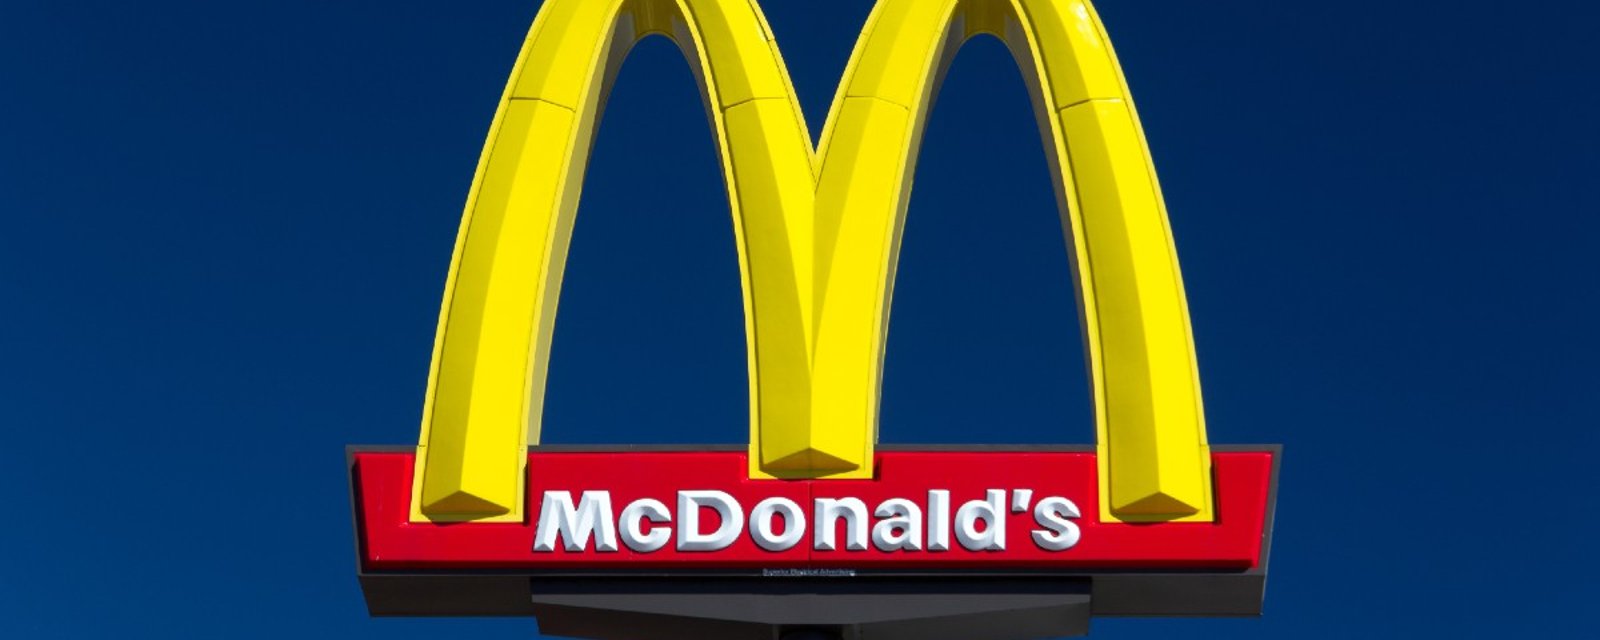 Le pire McDonald's du monde va fermer ses portes